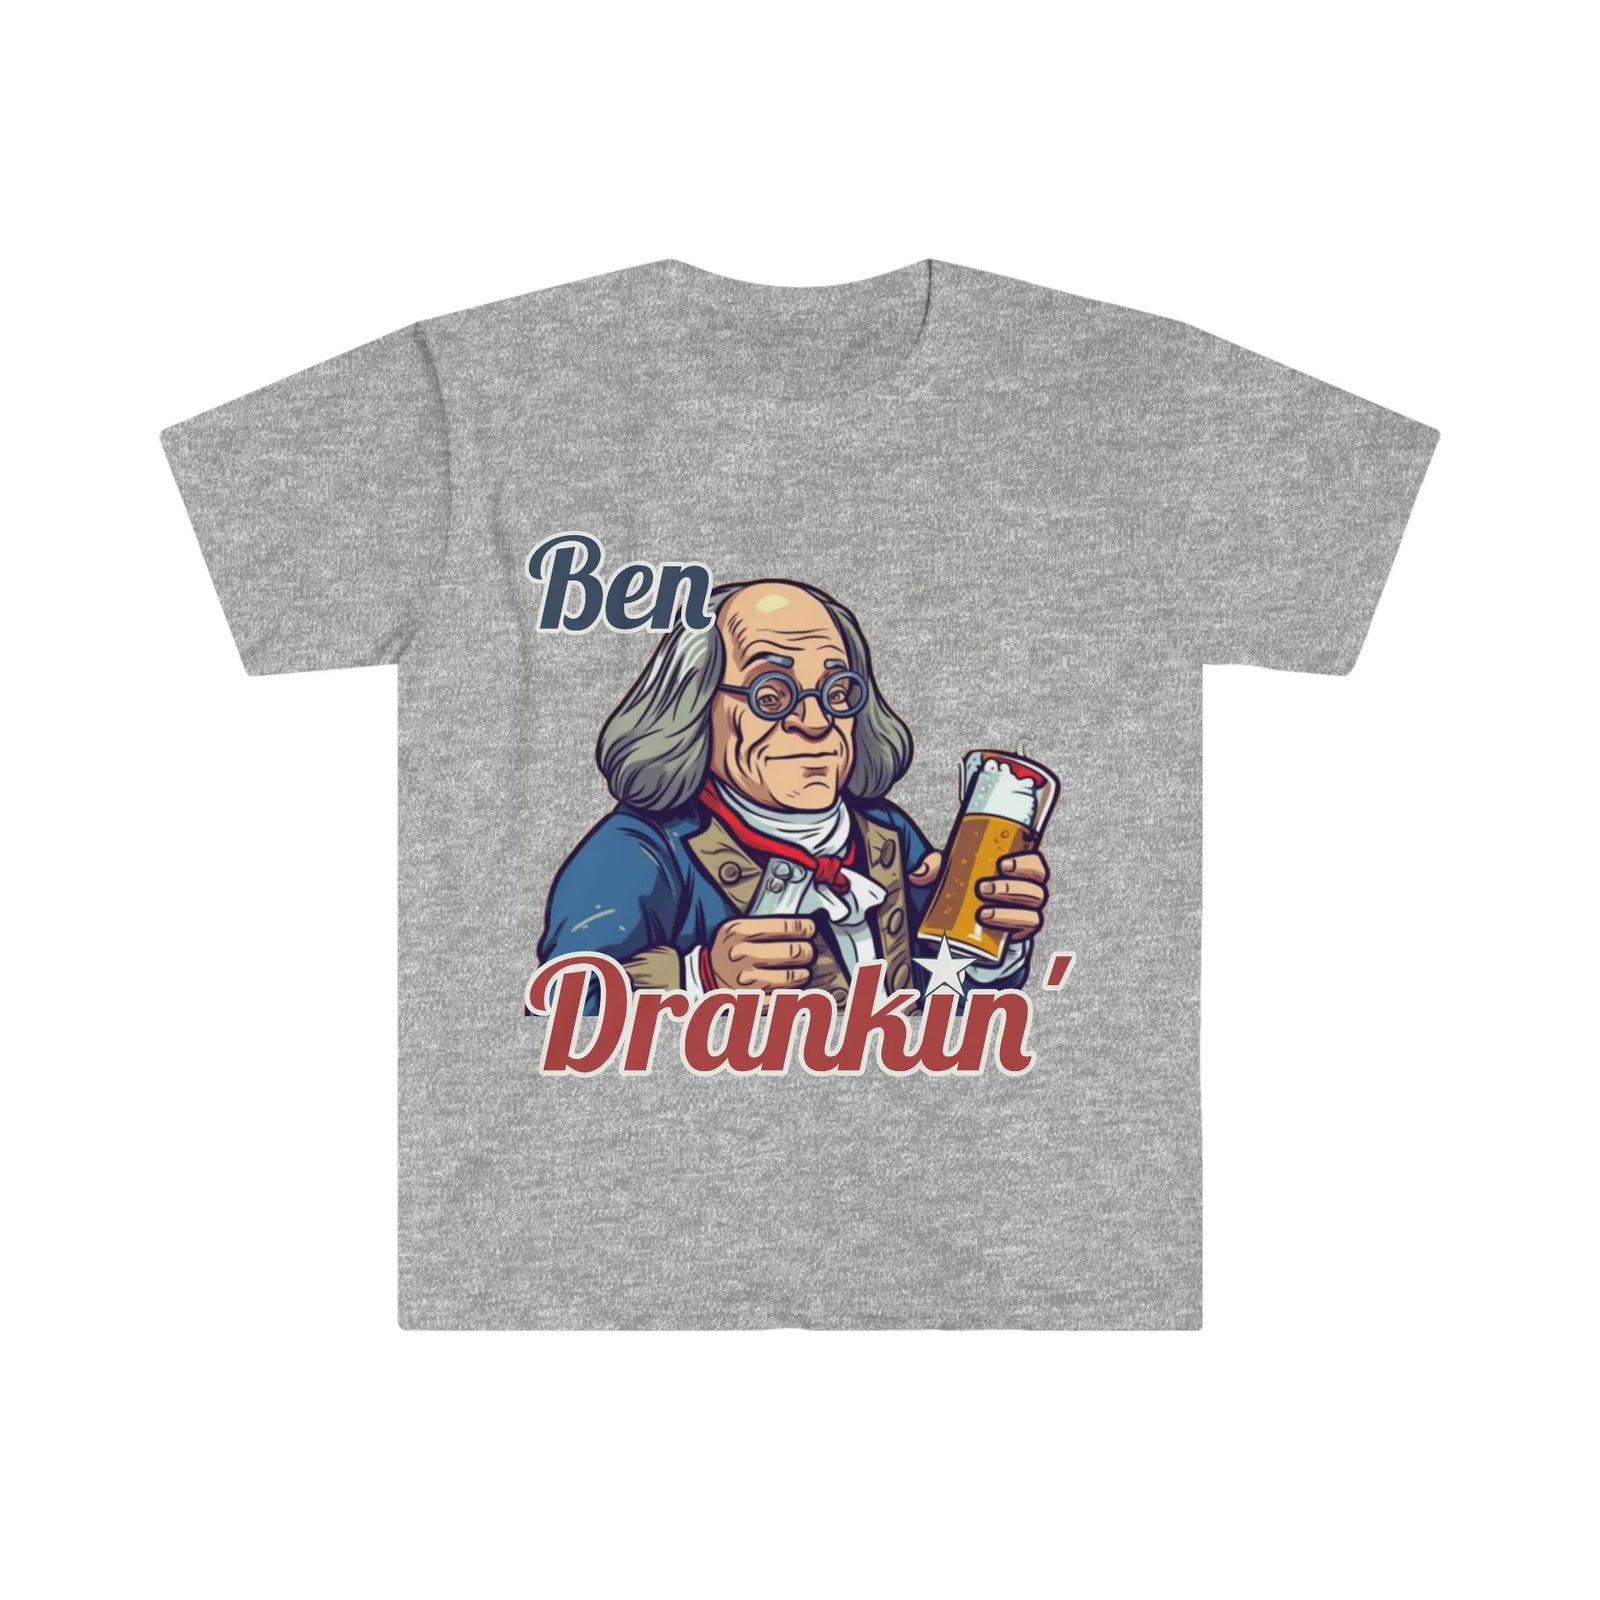 Ben Franklin's 